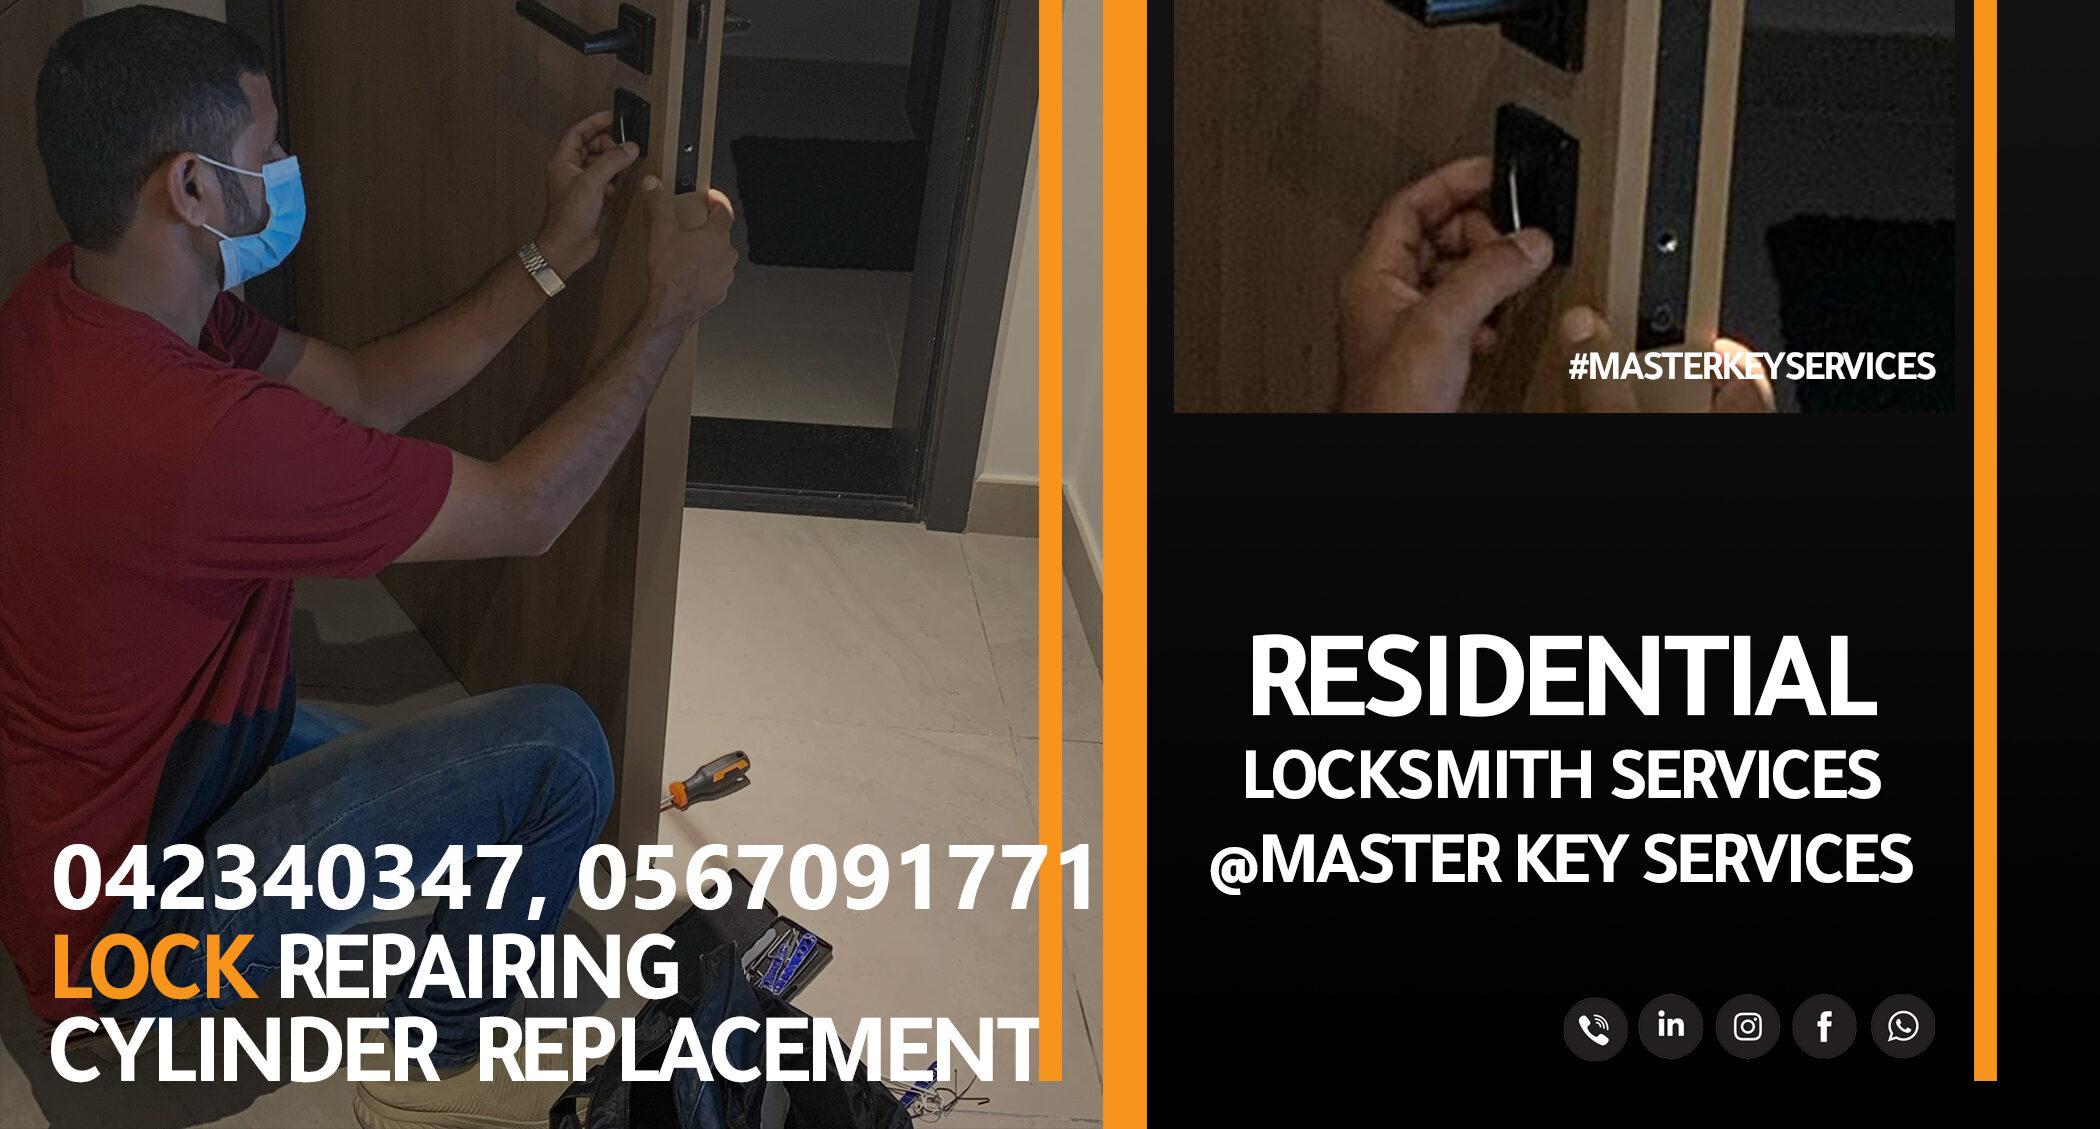 locksmith service in Dubai